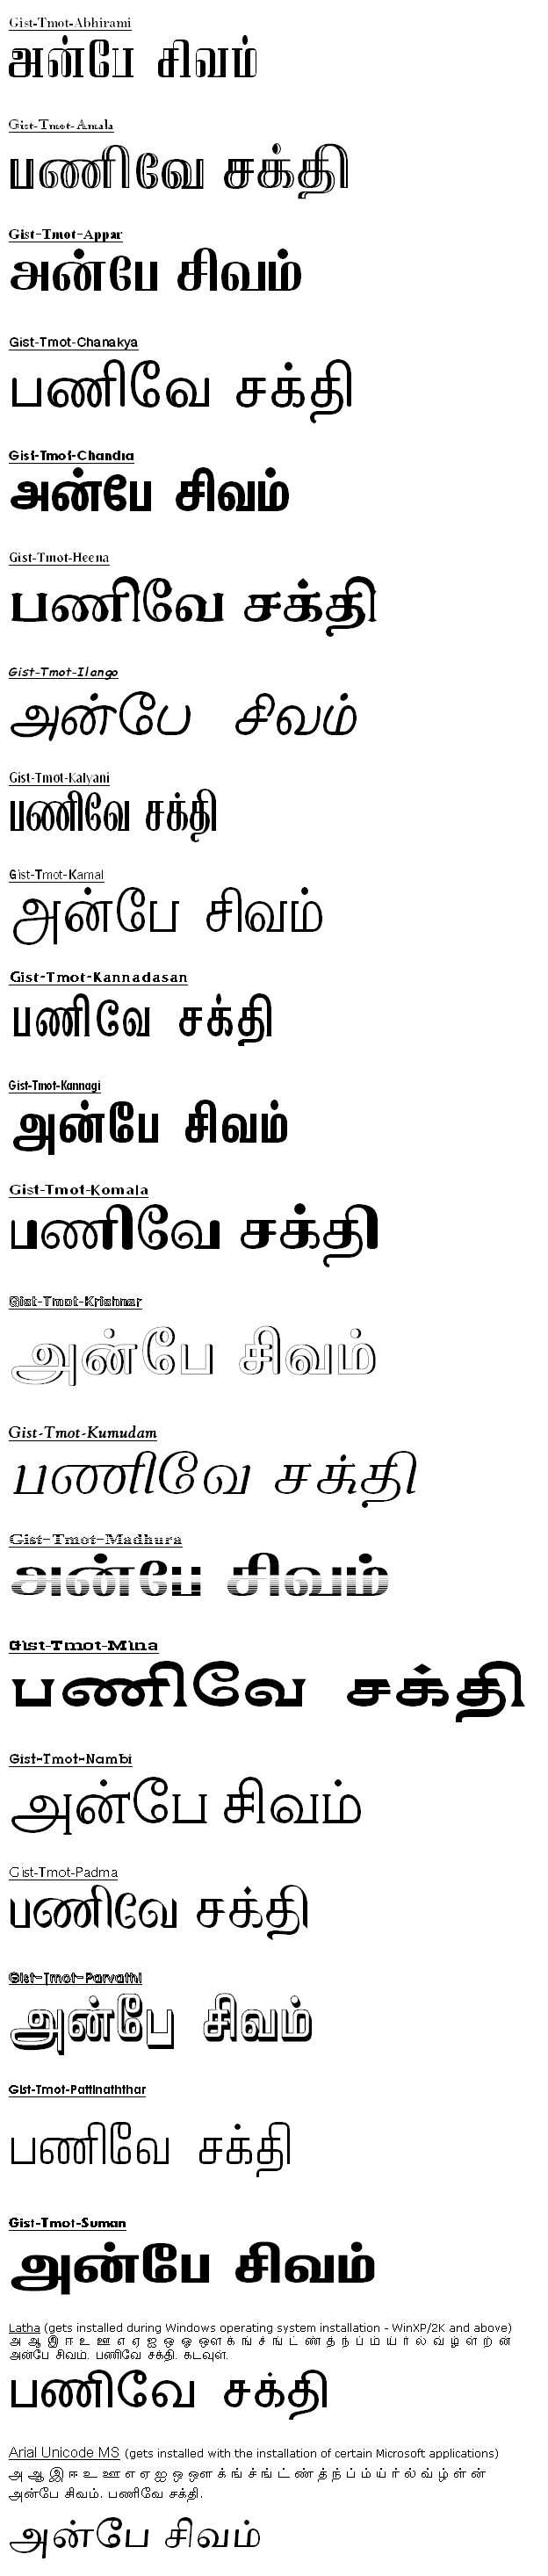 Adaanaa tamil font free download youtube